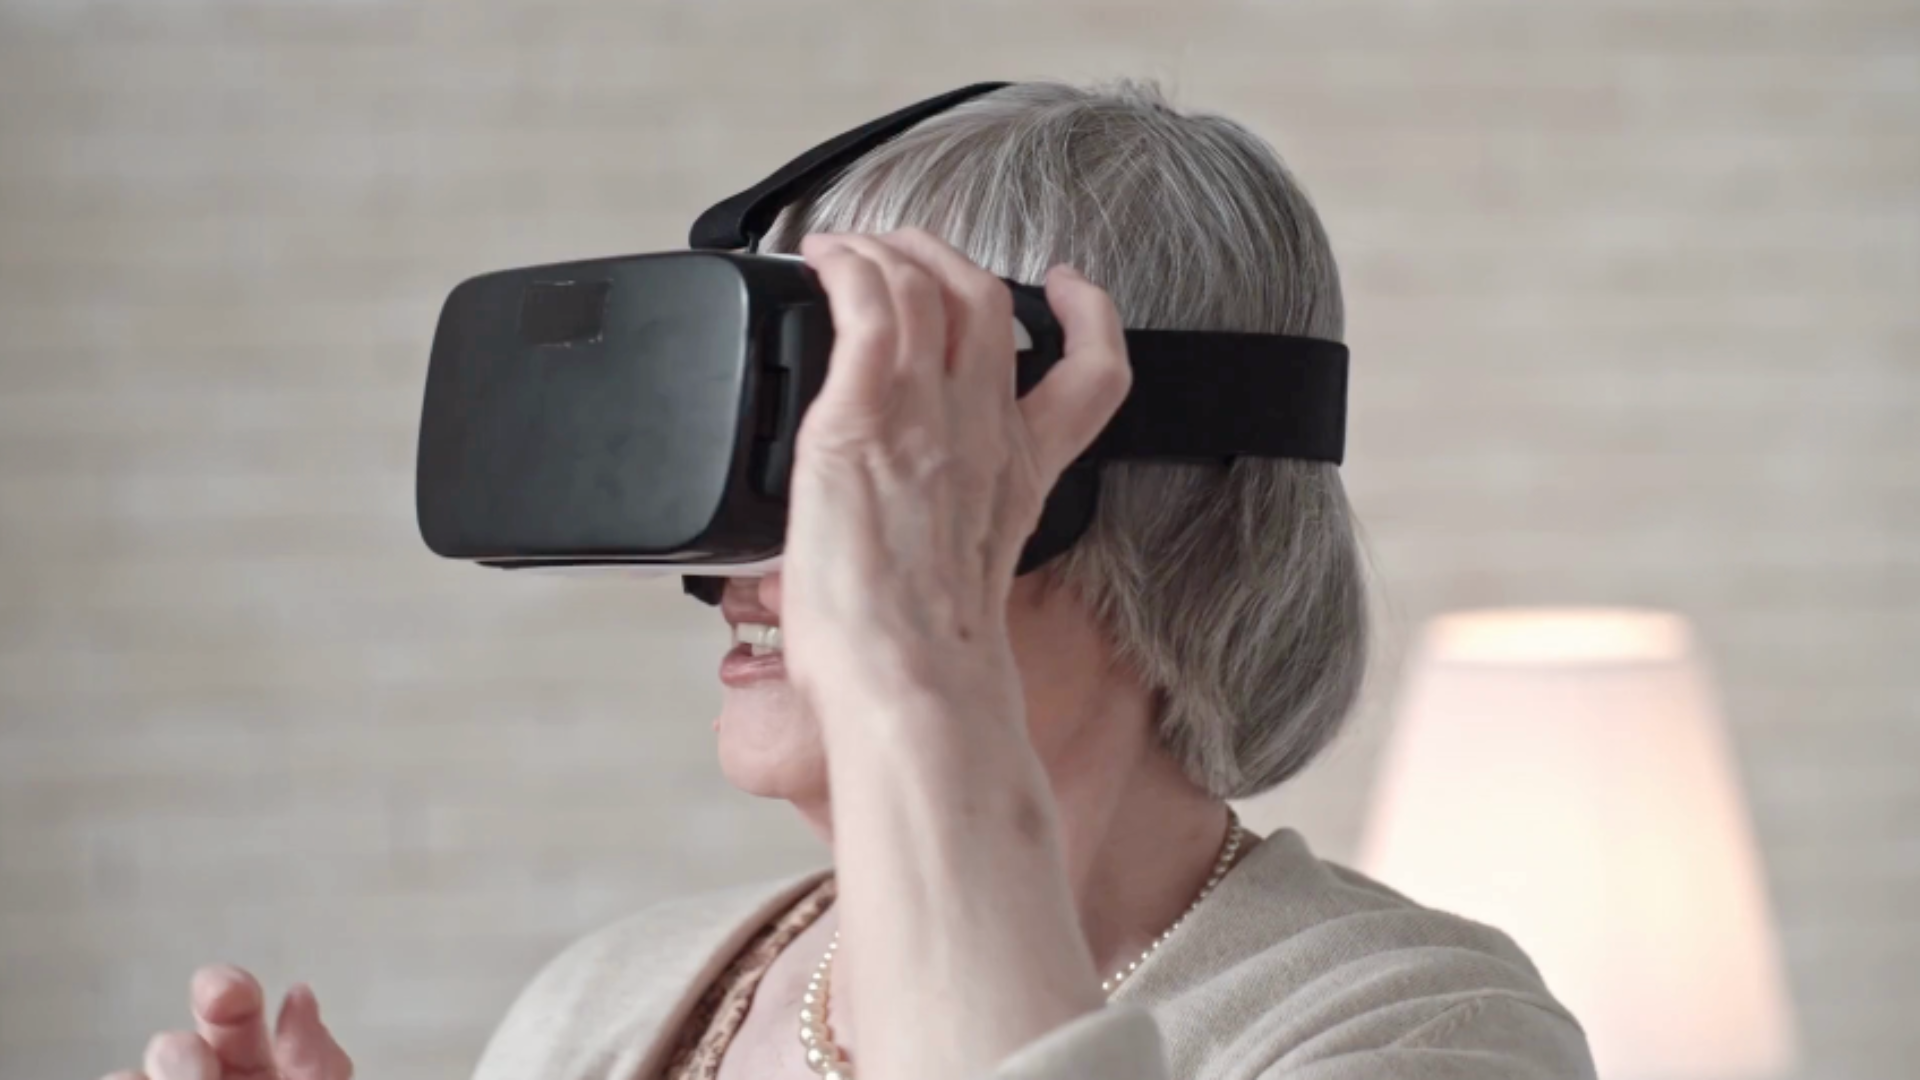 Aged Care VR